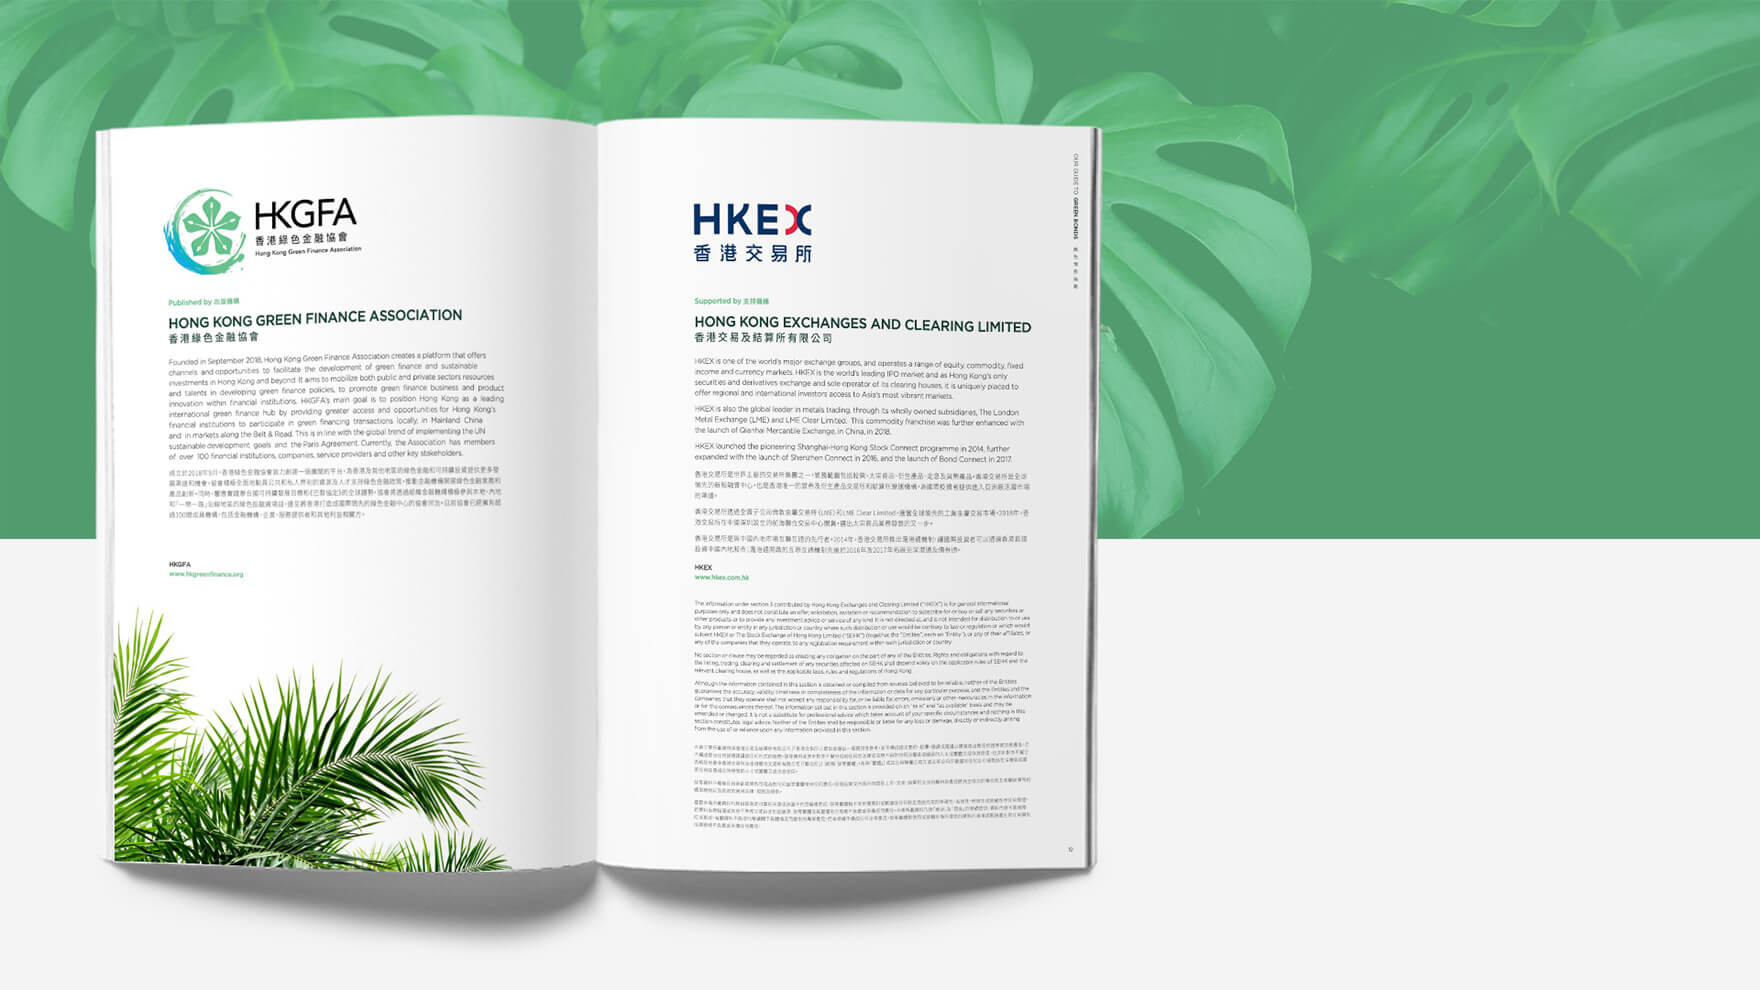 Branding Agency Hong Kong_HKGFA_Guideto Green Bond report design_CheddarMedia_6_1760